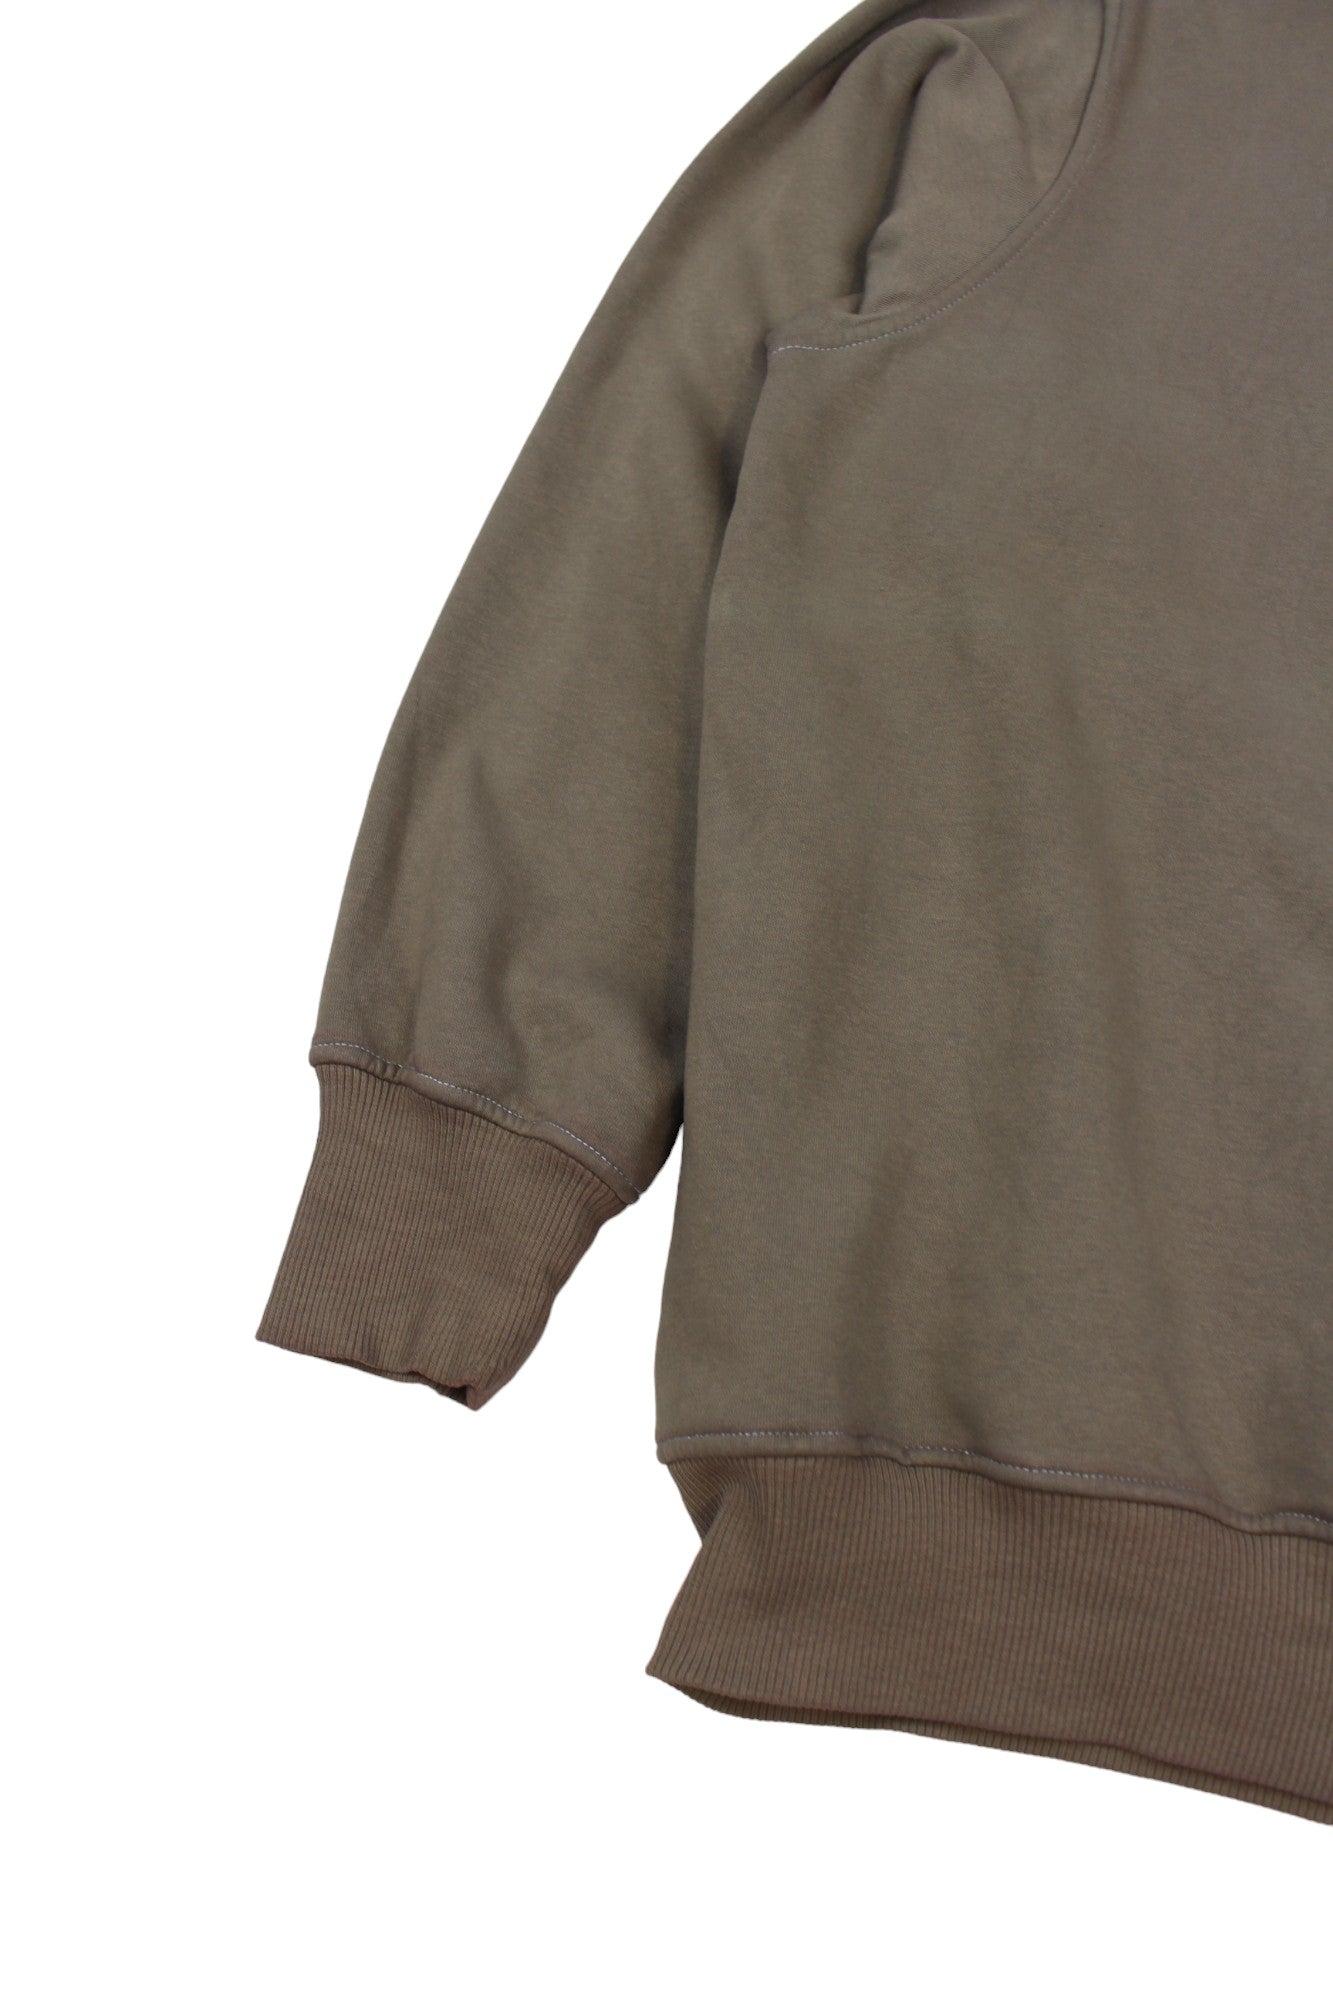 00s Nike Brown Embroidered Sweatshirt (XL)